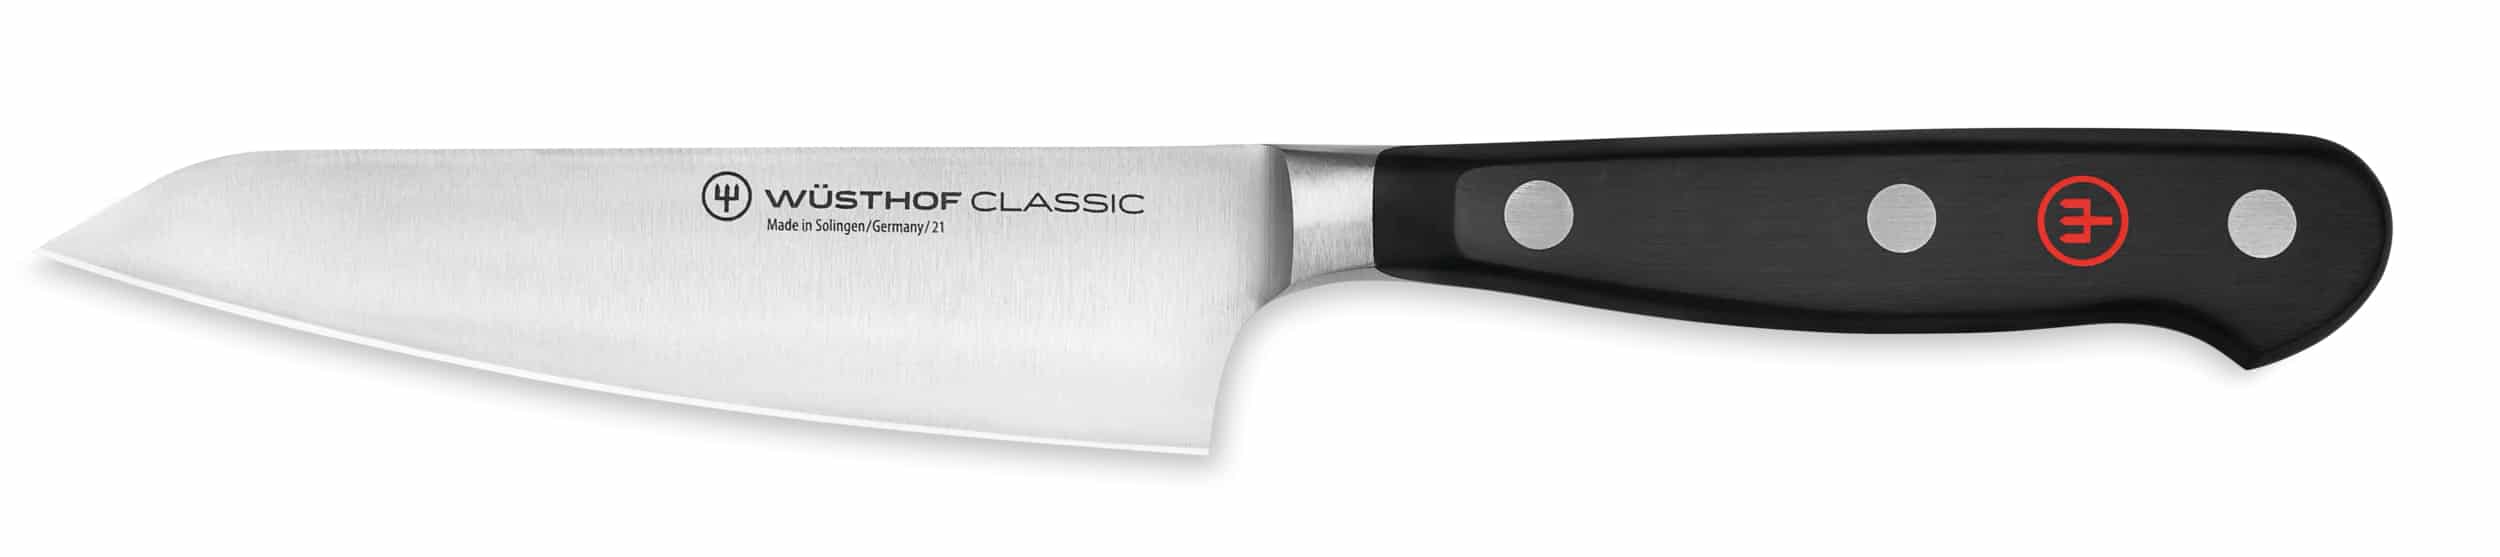 Wusthof Classic Try Me Knife